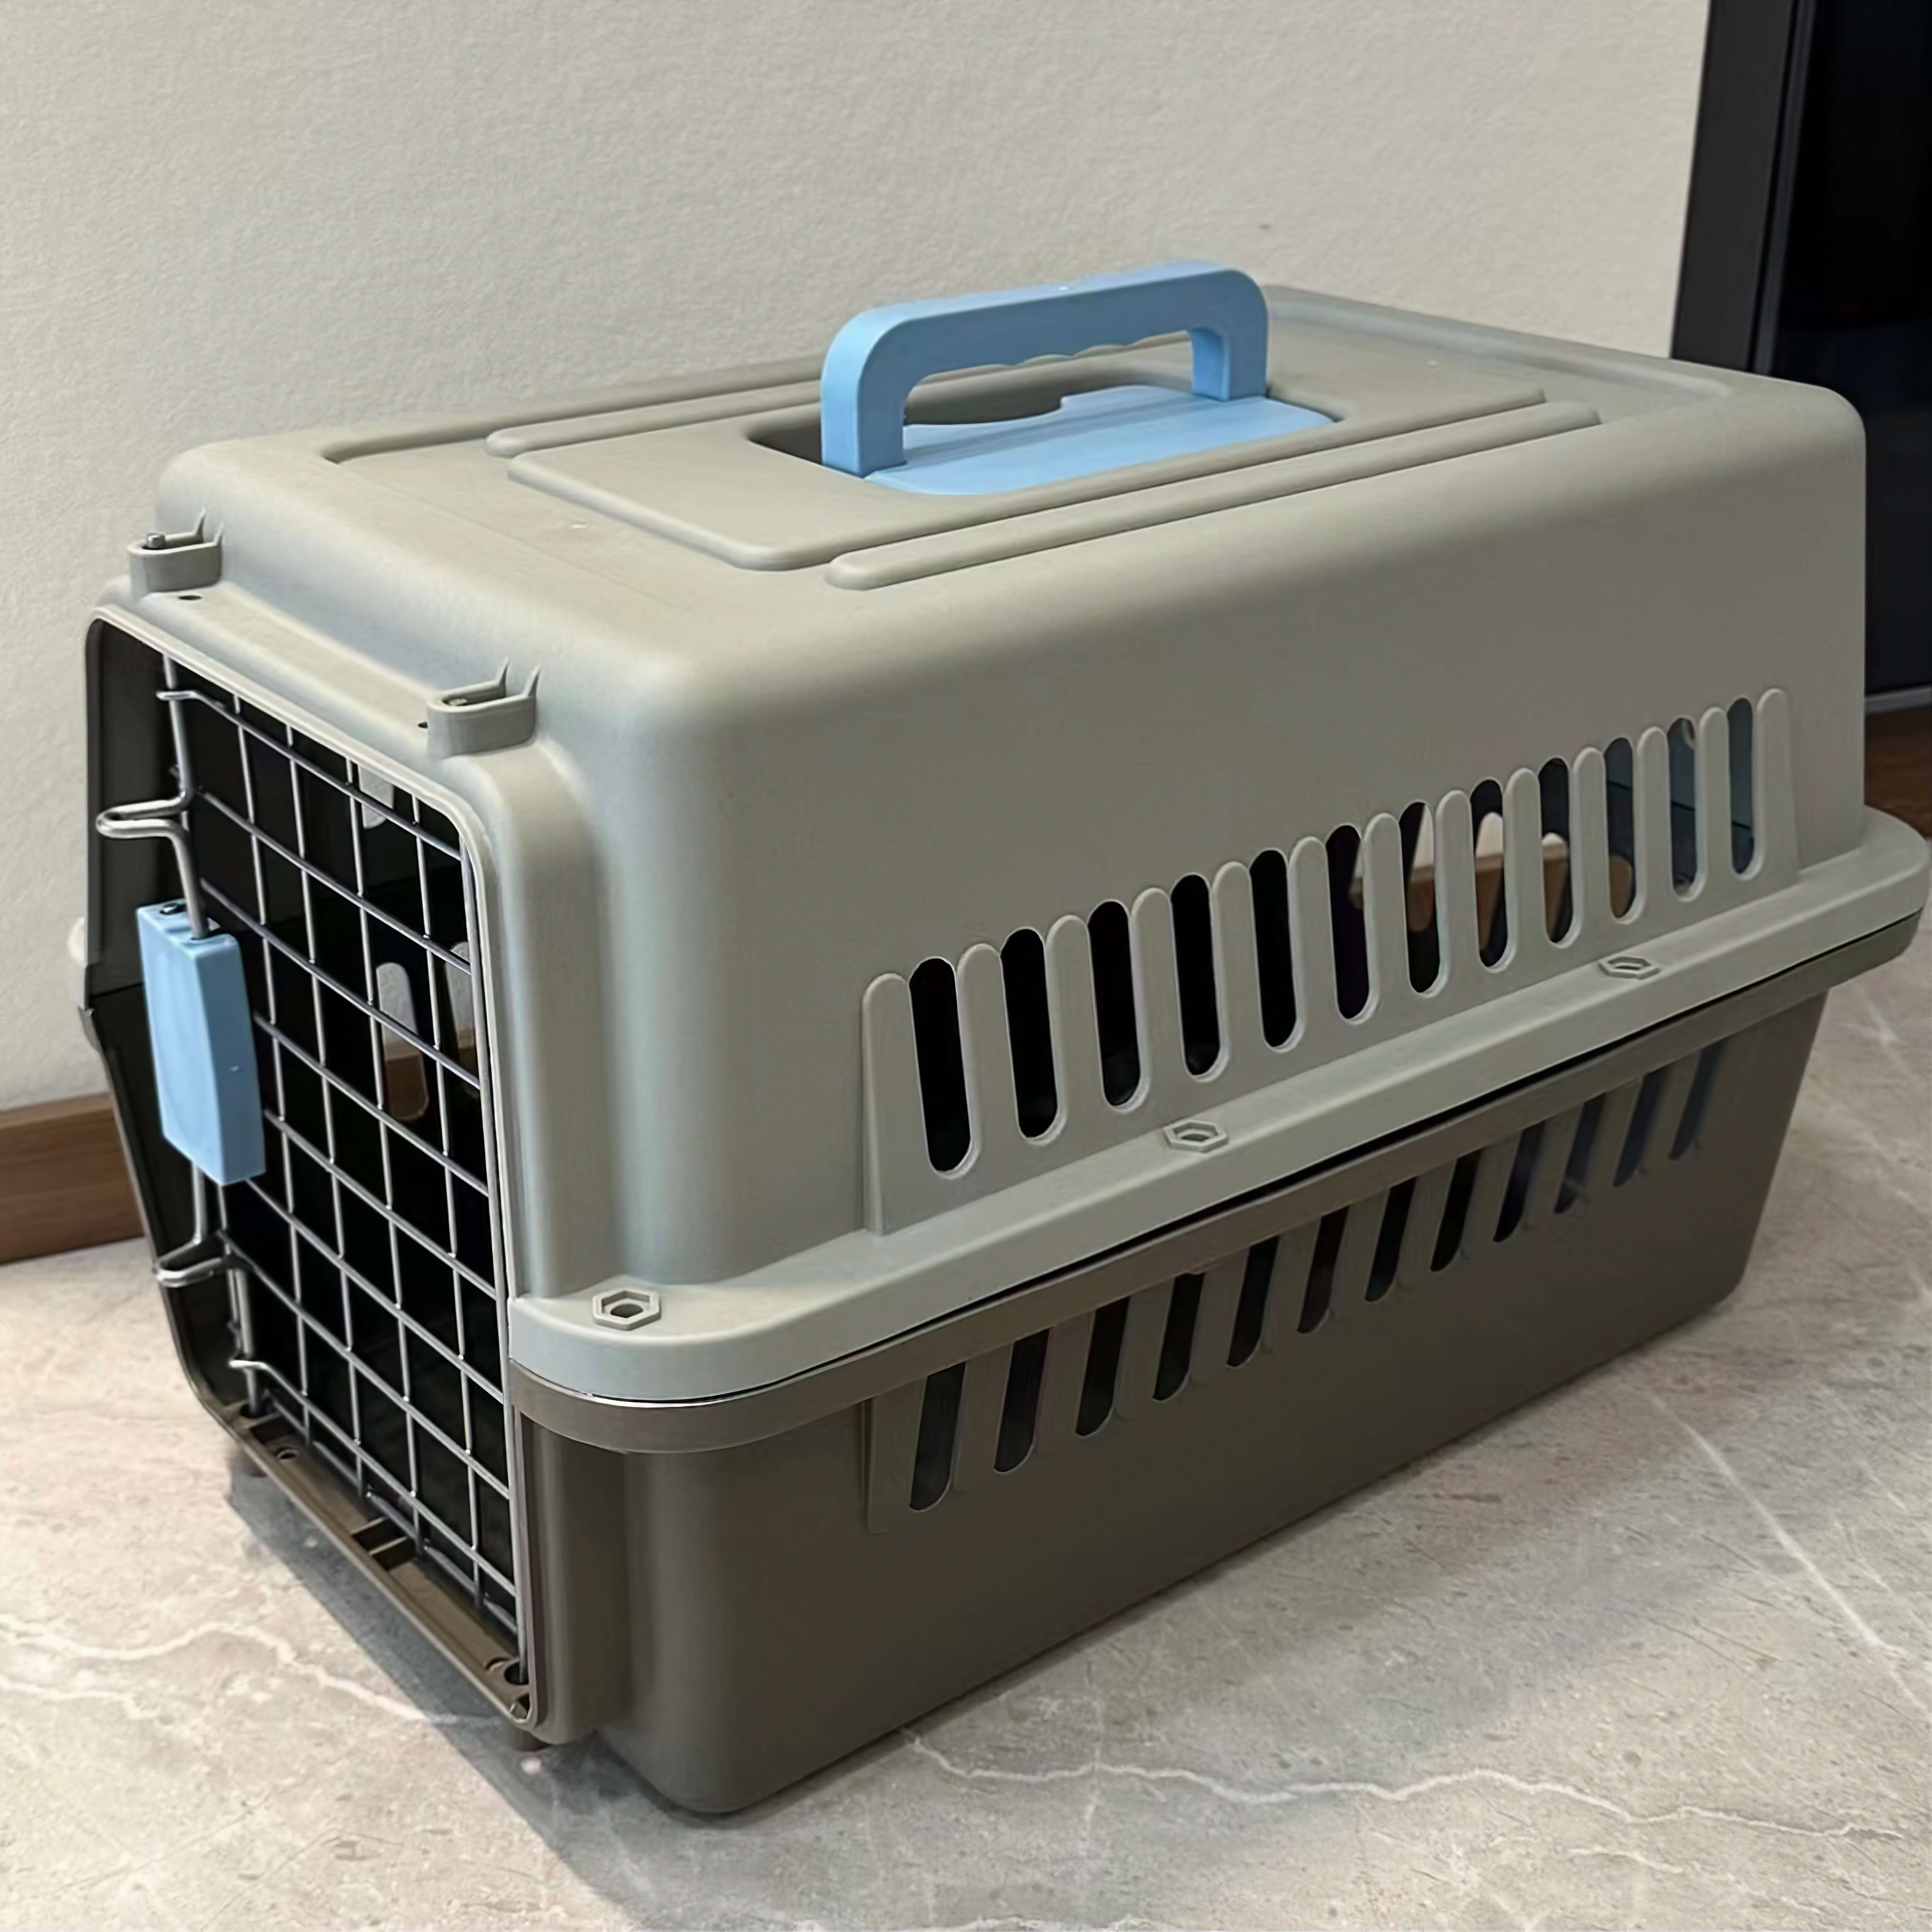 IATA Pet Crate Standard - Pet Travel